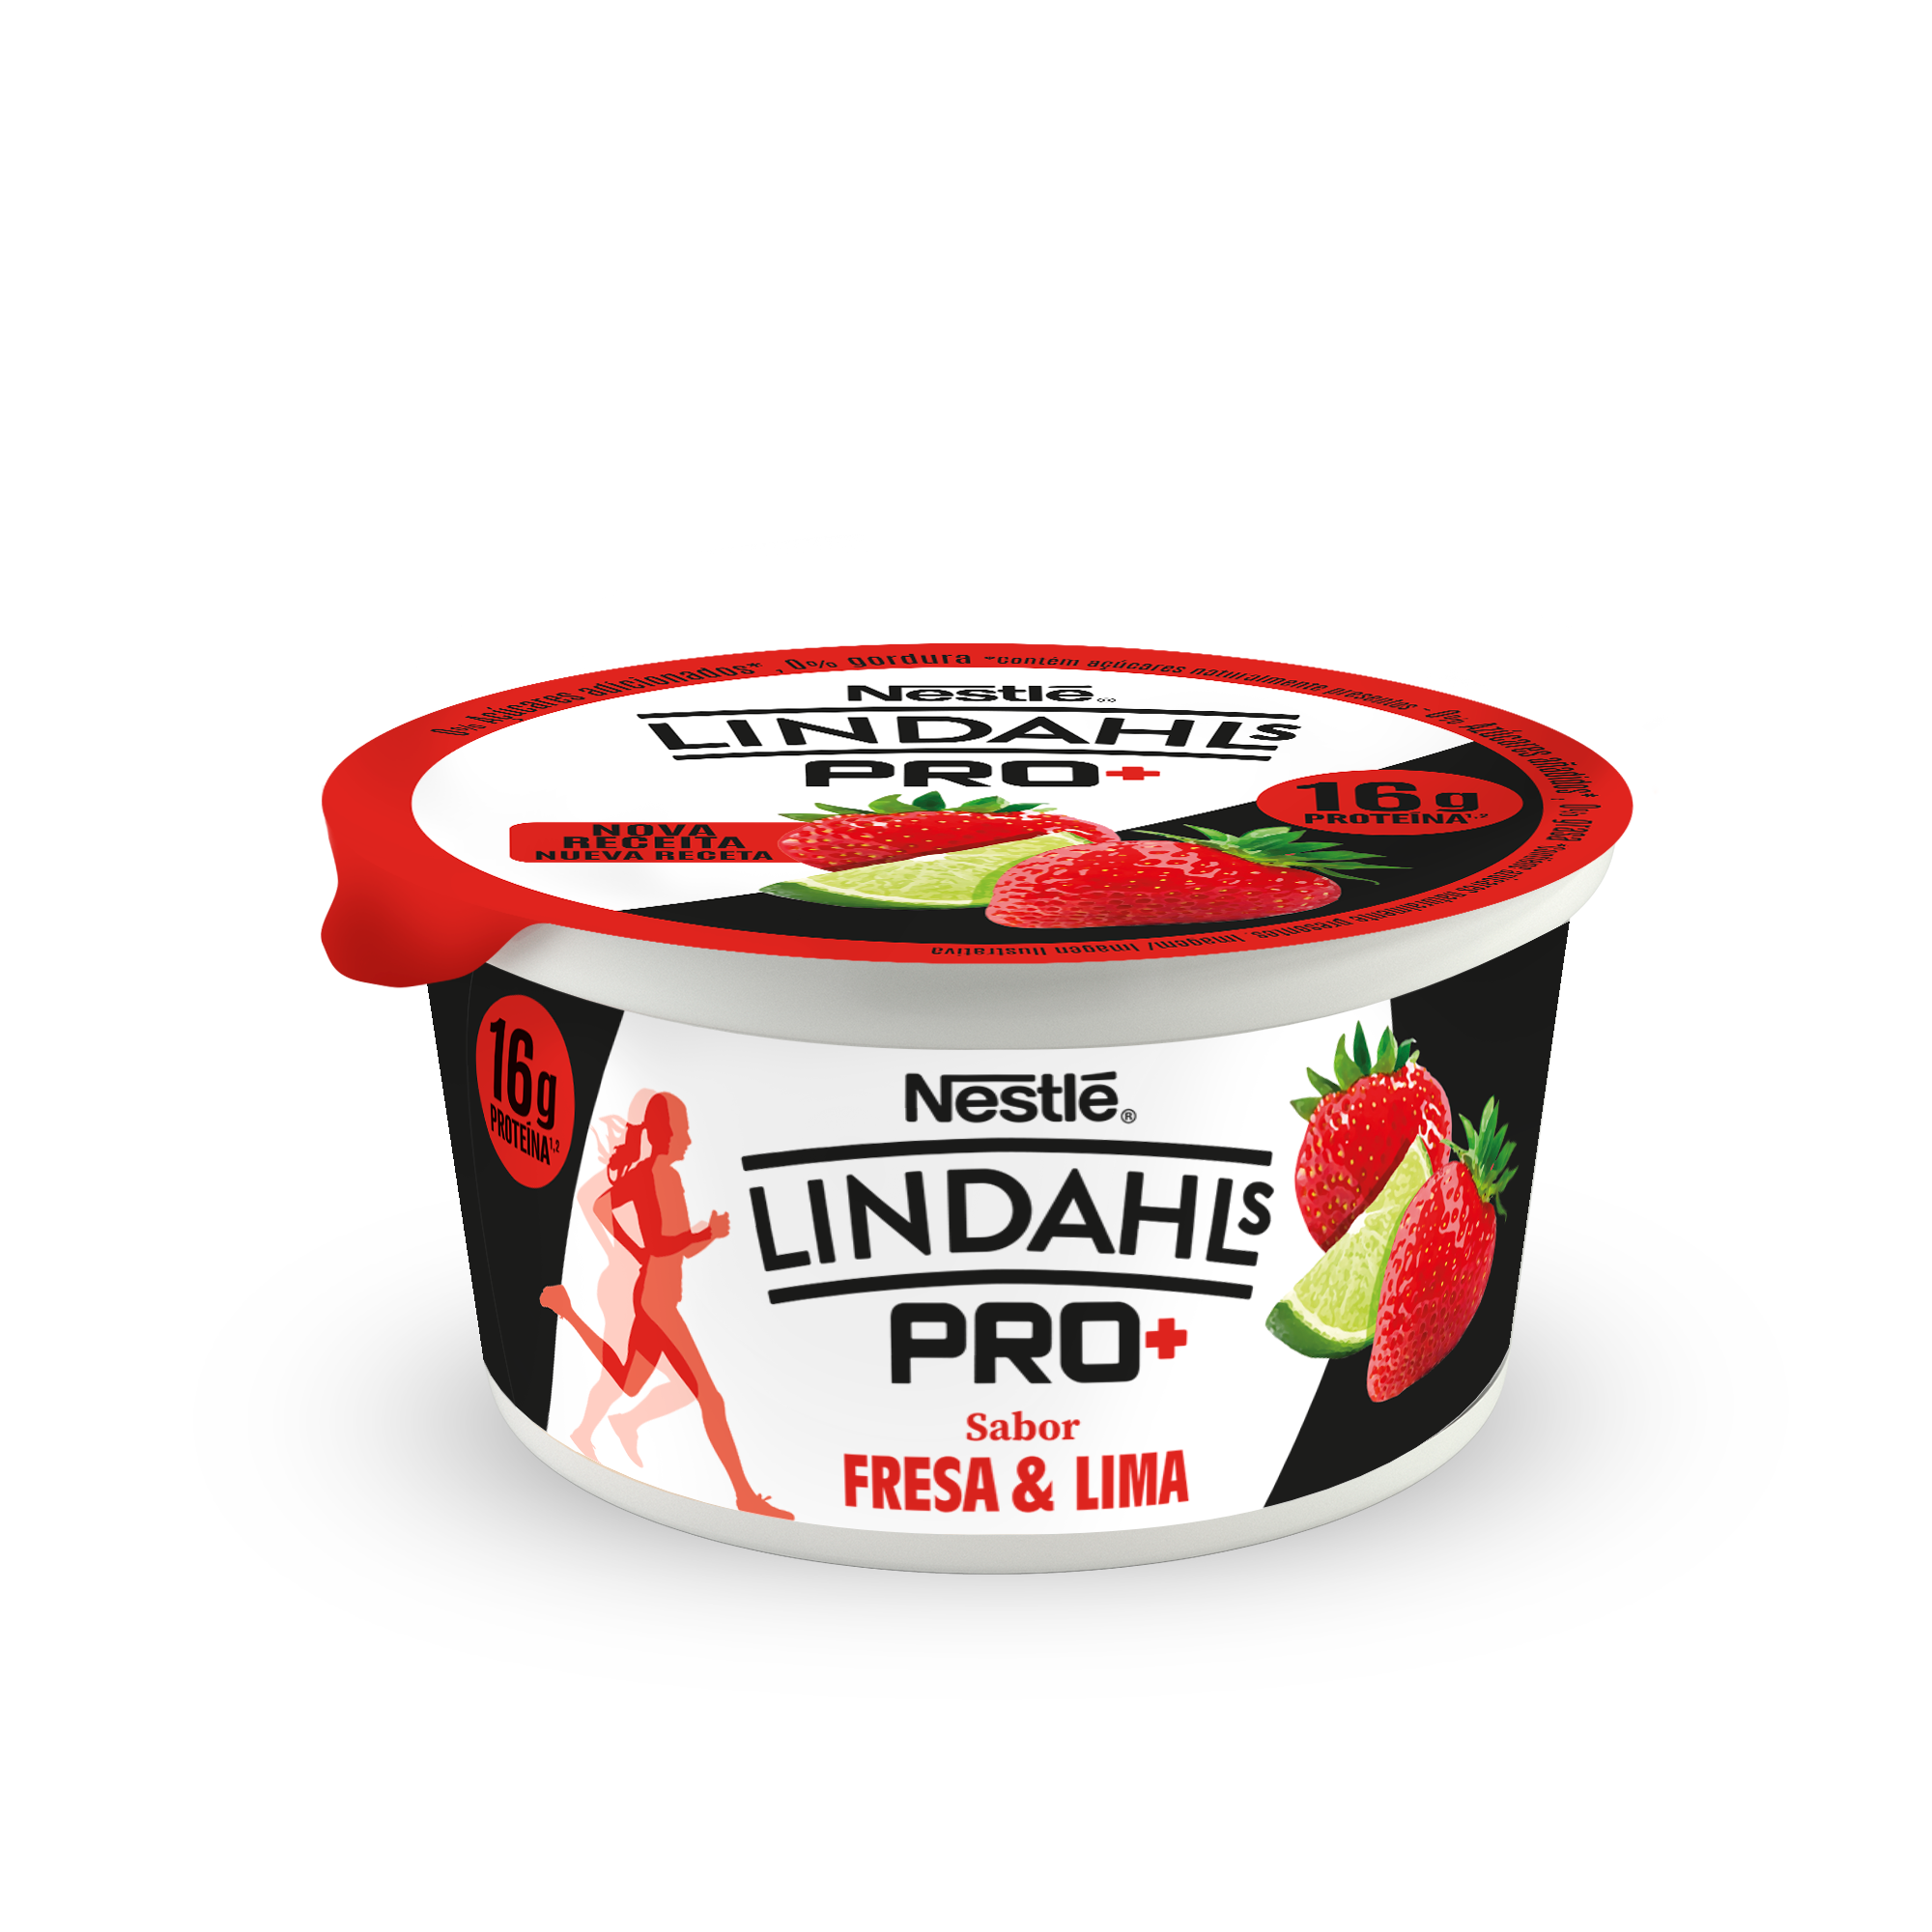 Lindahls Pro+ Fresa-Lima